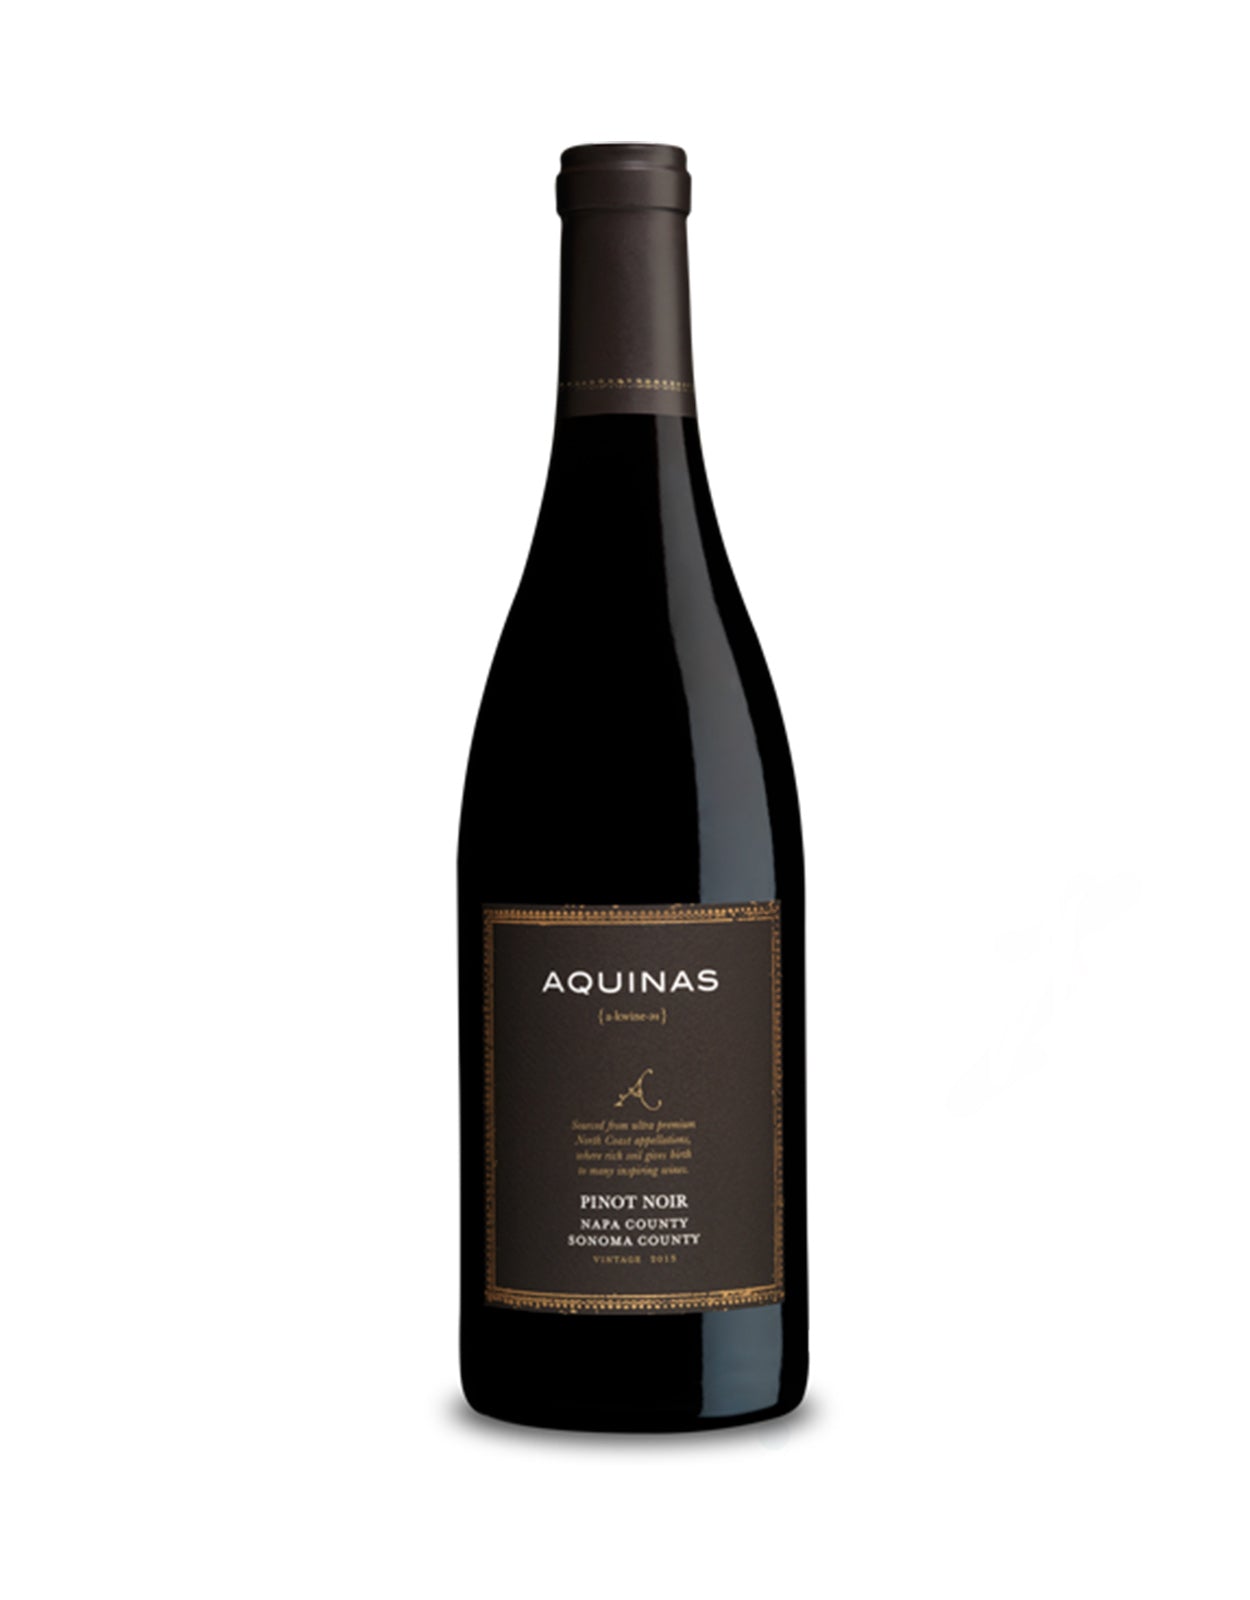 Aquinas Pinot Noir 2018